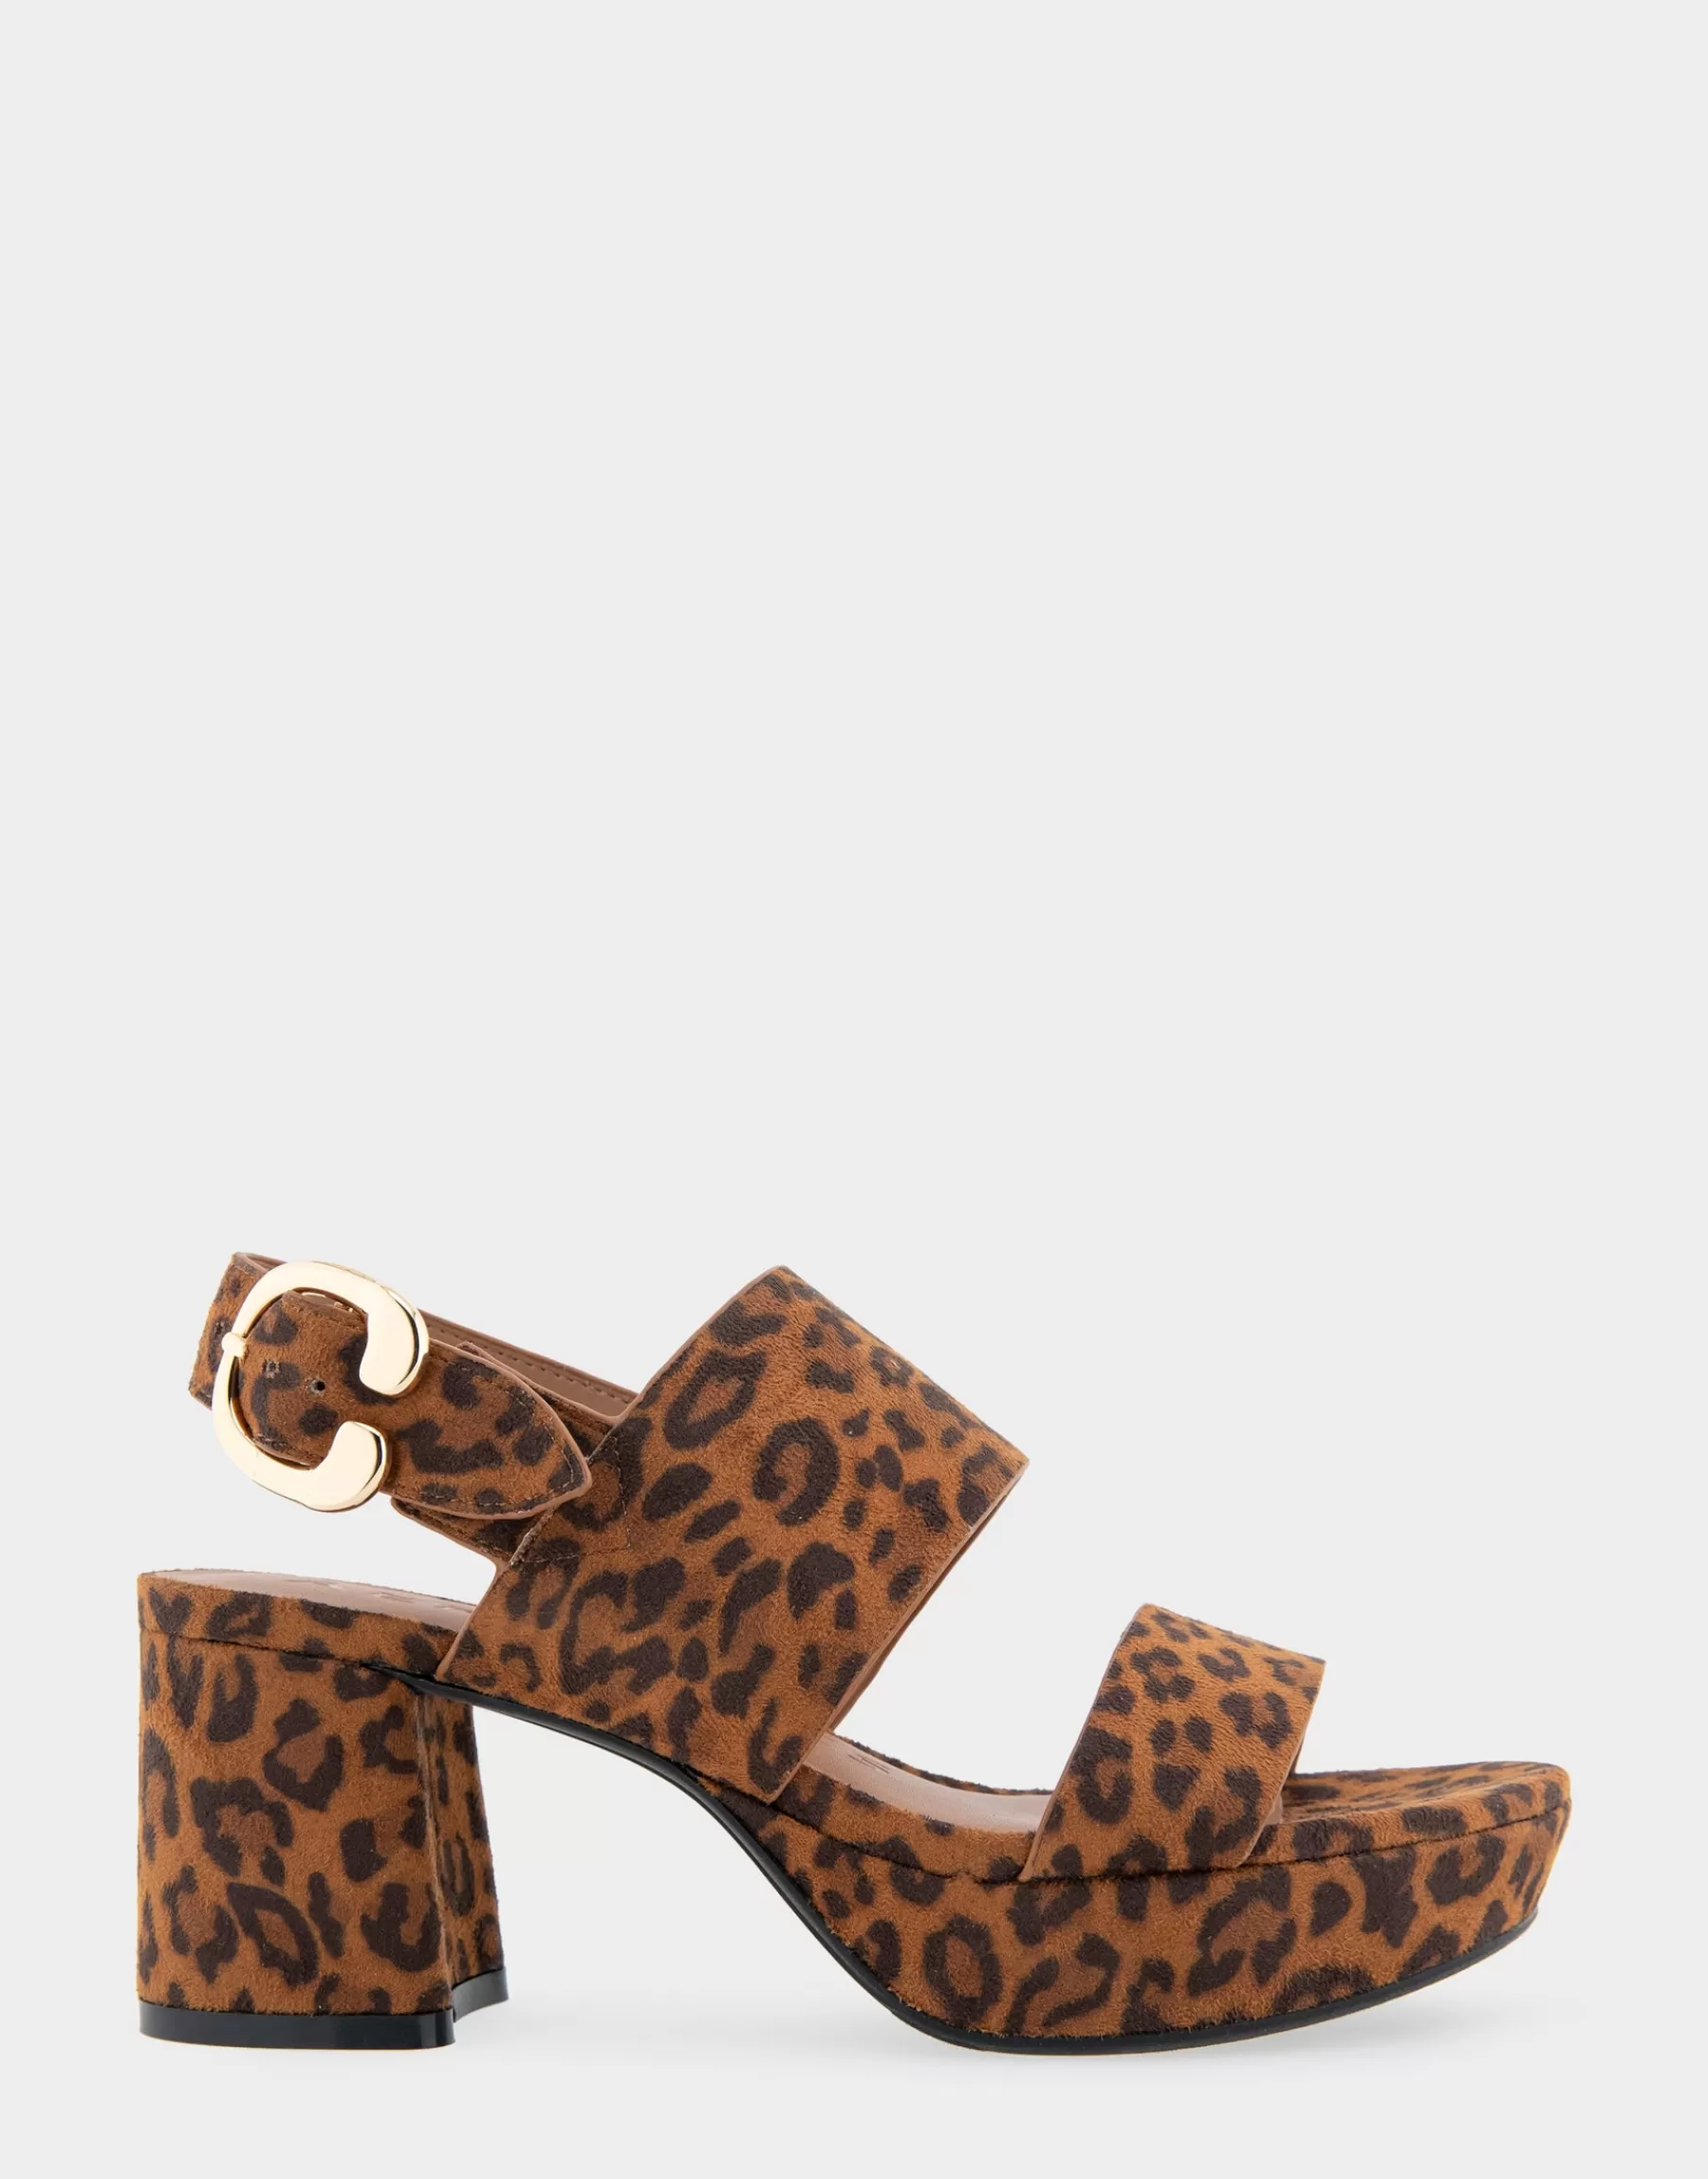 Aerosoles Comfortable Women's Platform Sandal in Print Faux Suede Leopard Best Sale